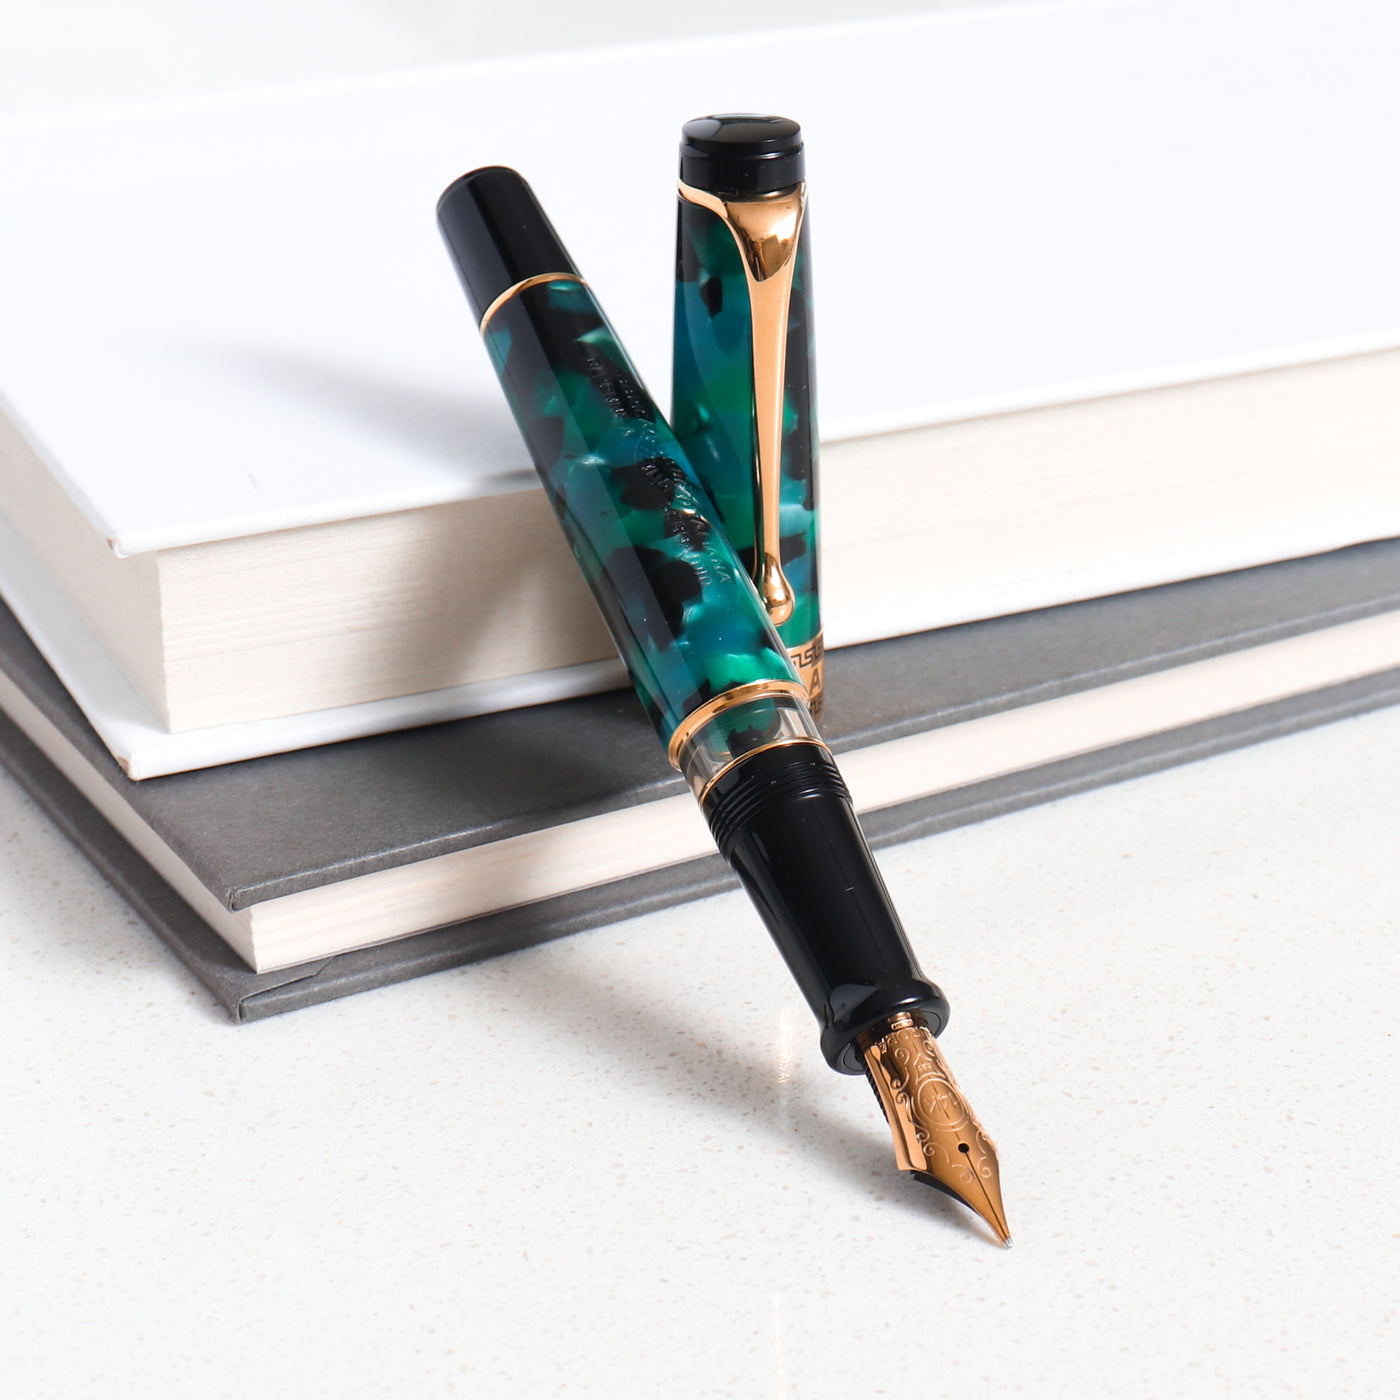 Optima Auroloide Emerald Green Fountain Pen